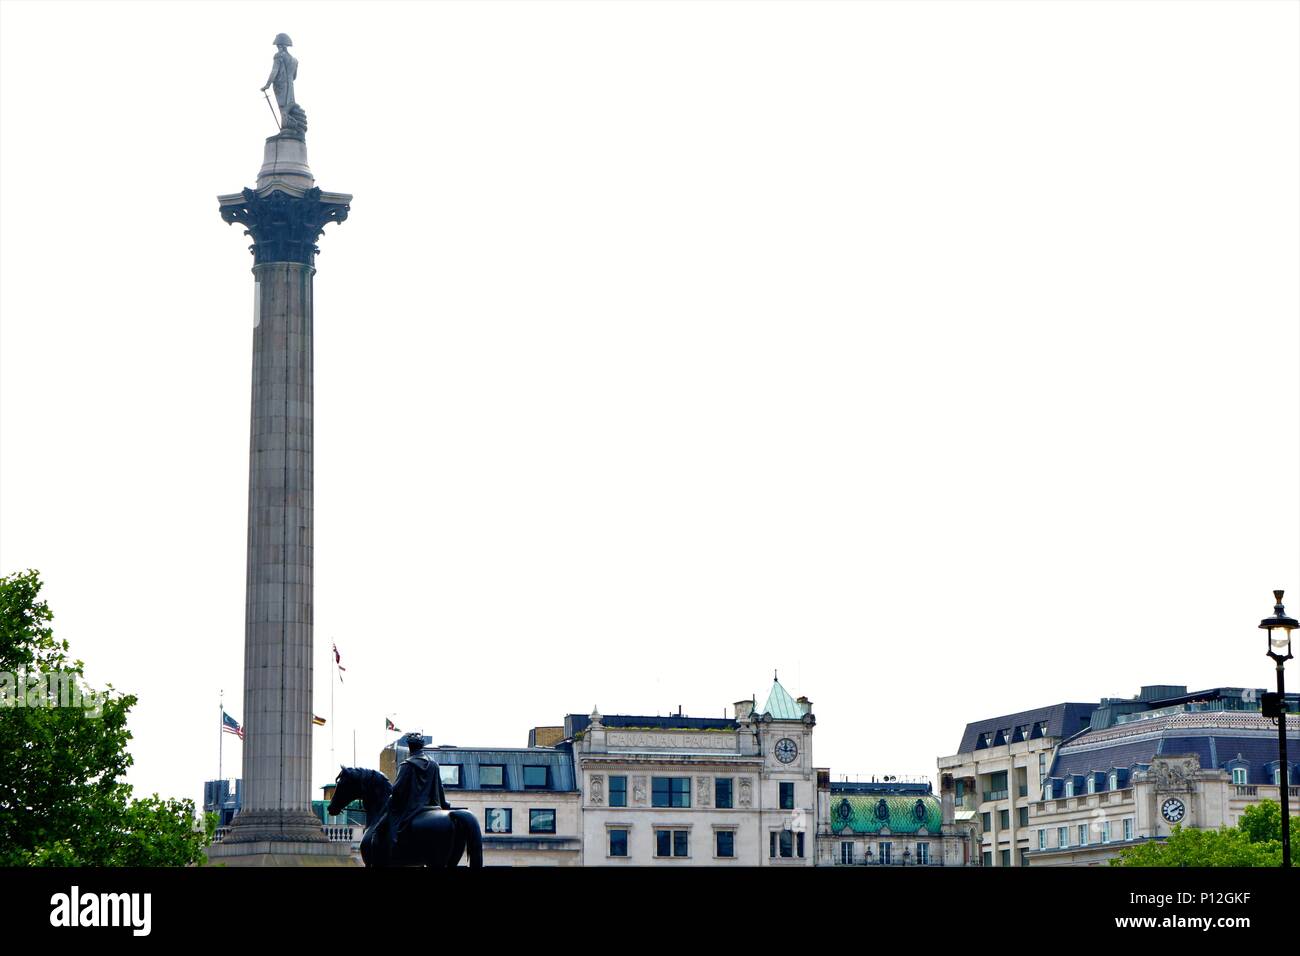 Nelson's Column monument at Trafalgar Square, London,UK Stock Photo